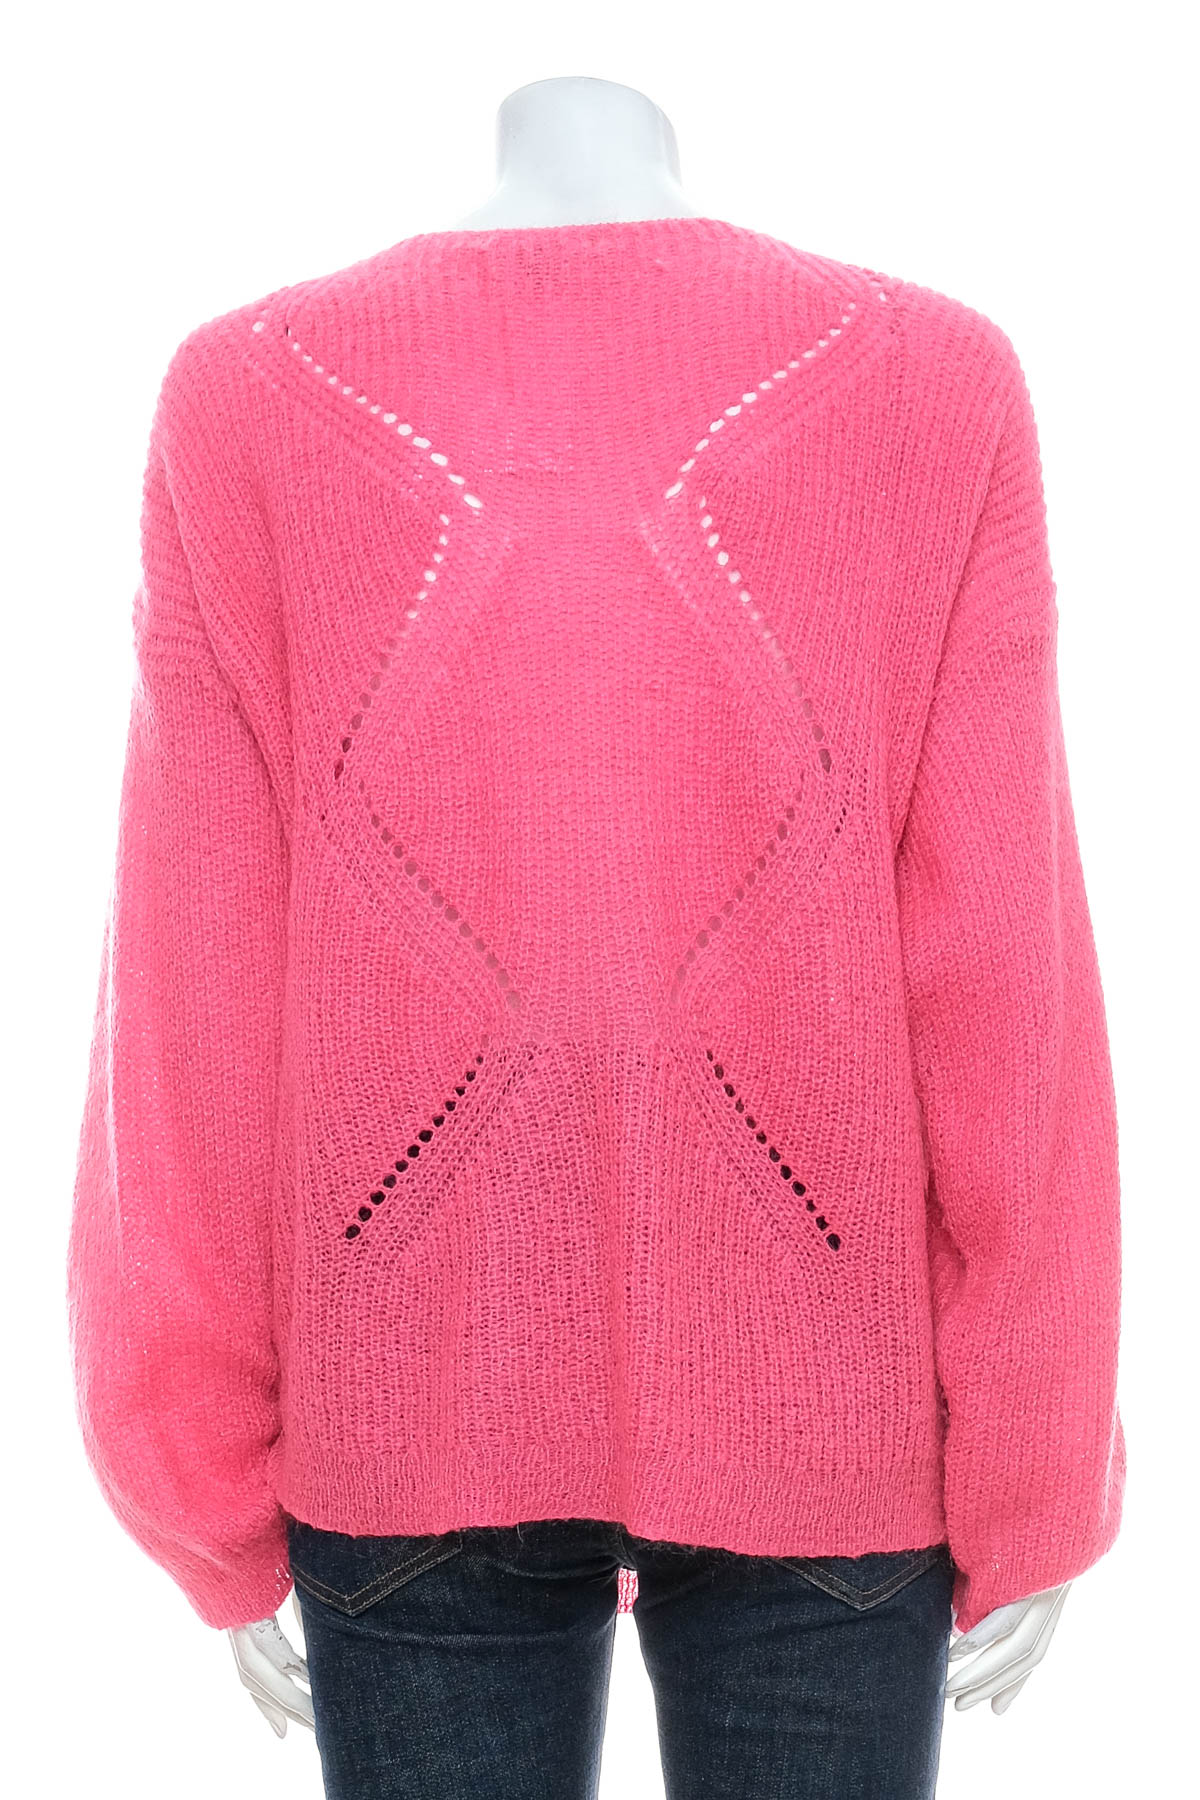 Women's sweater - Marie Méro - 1